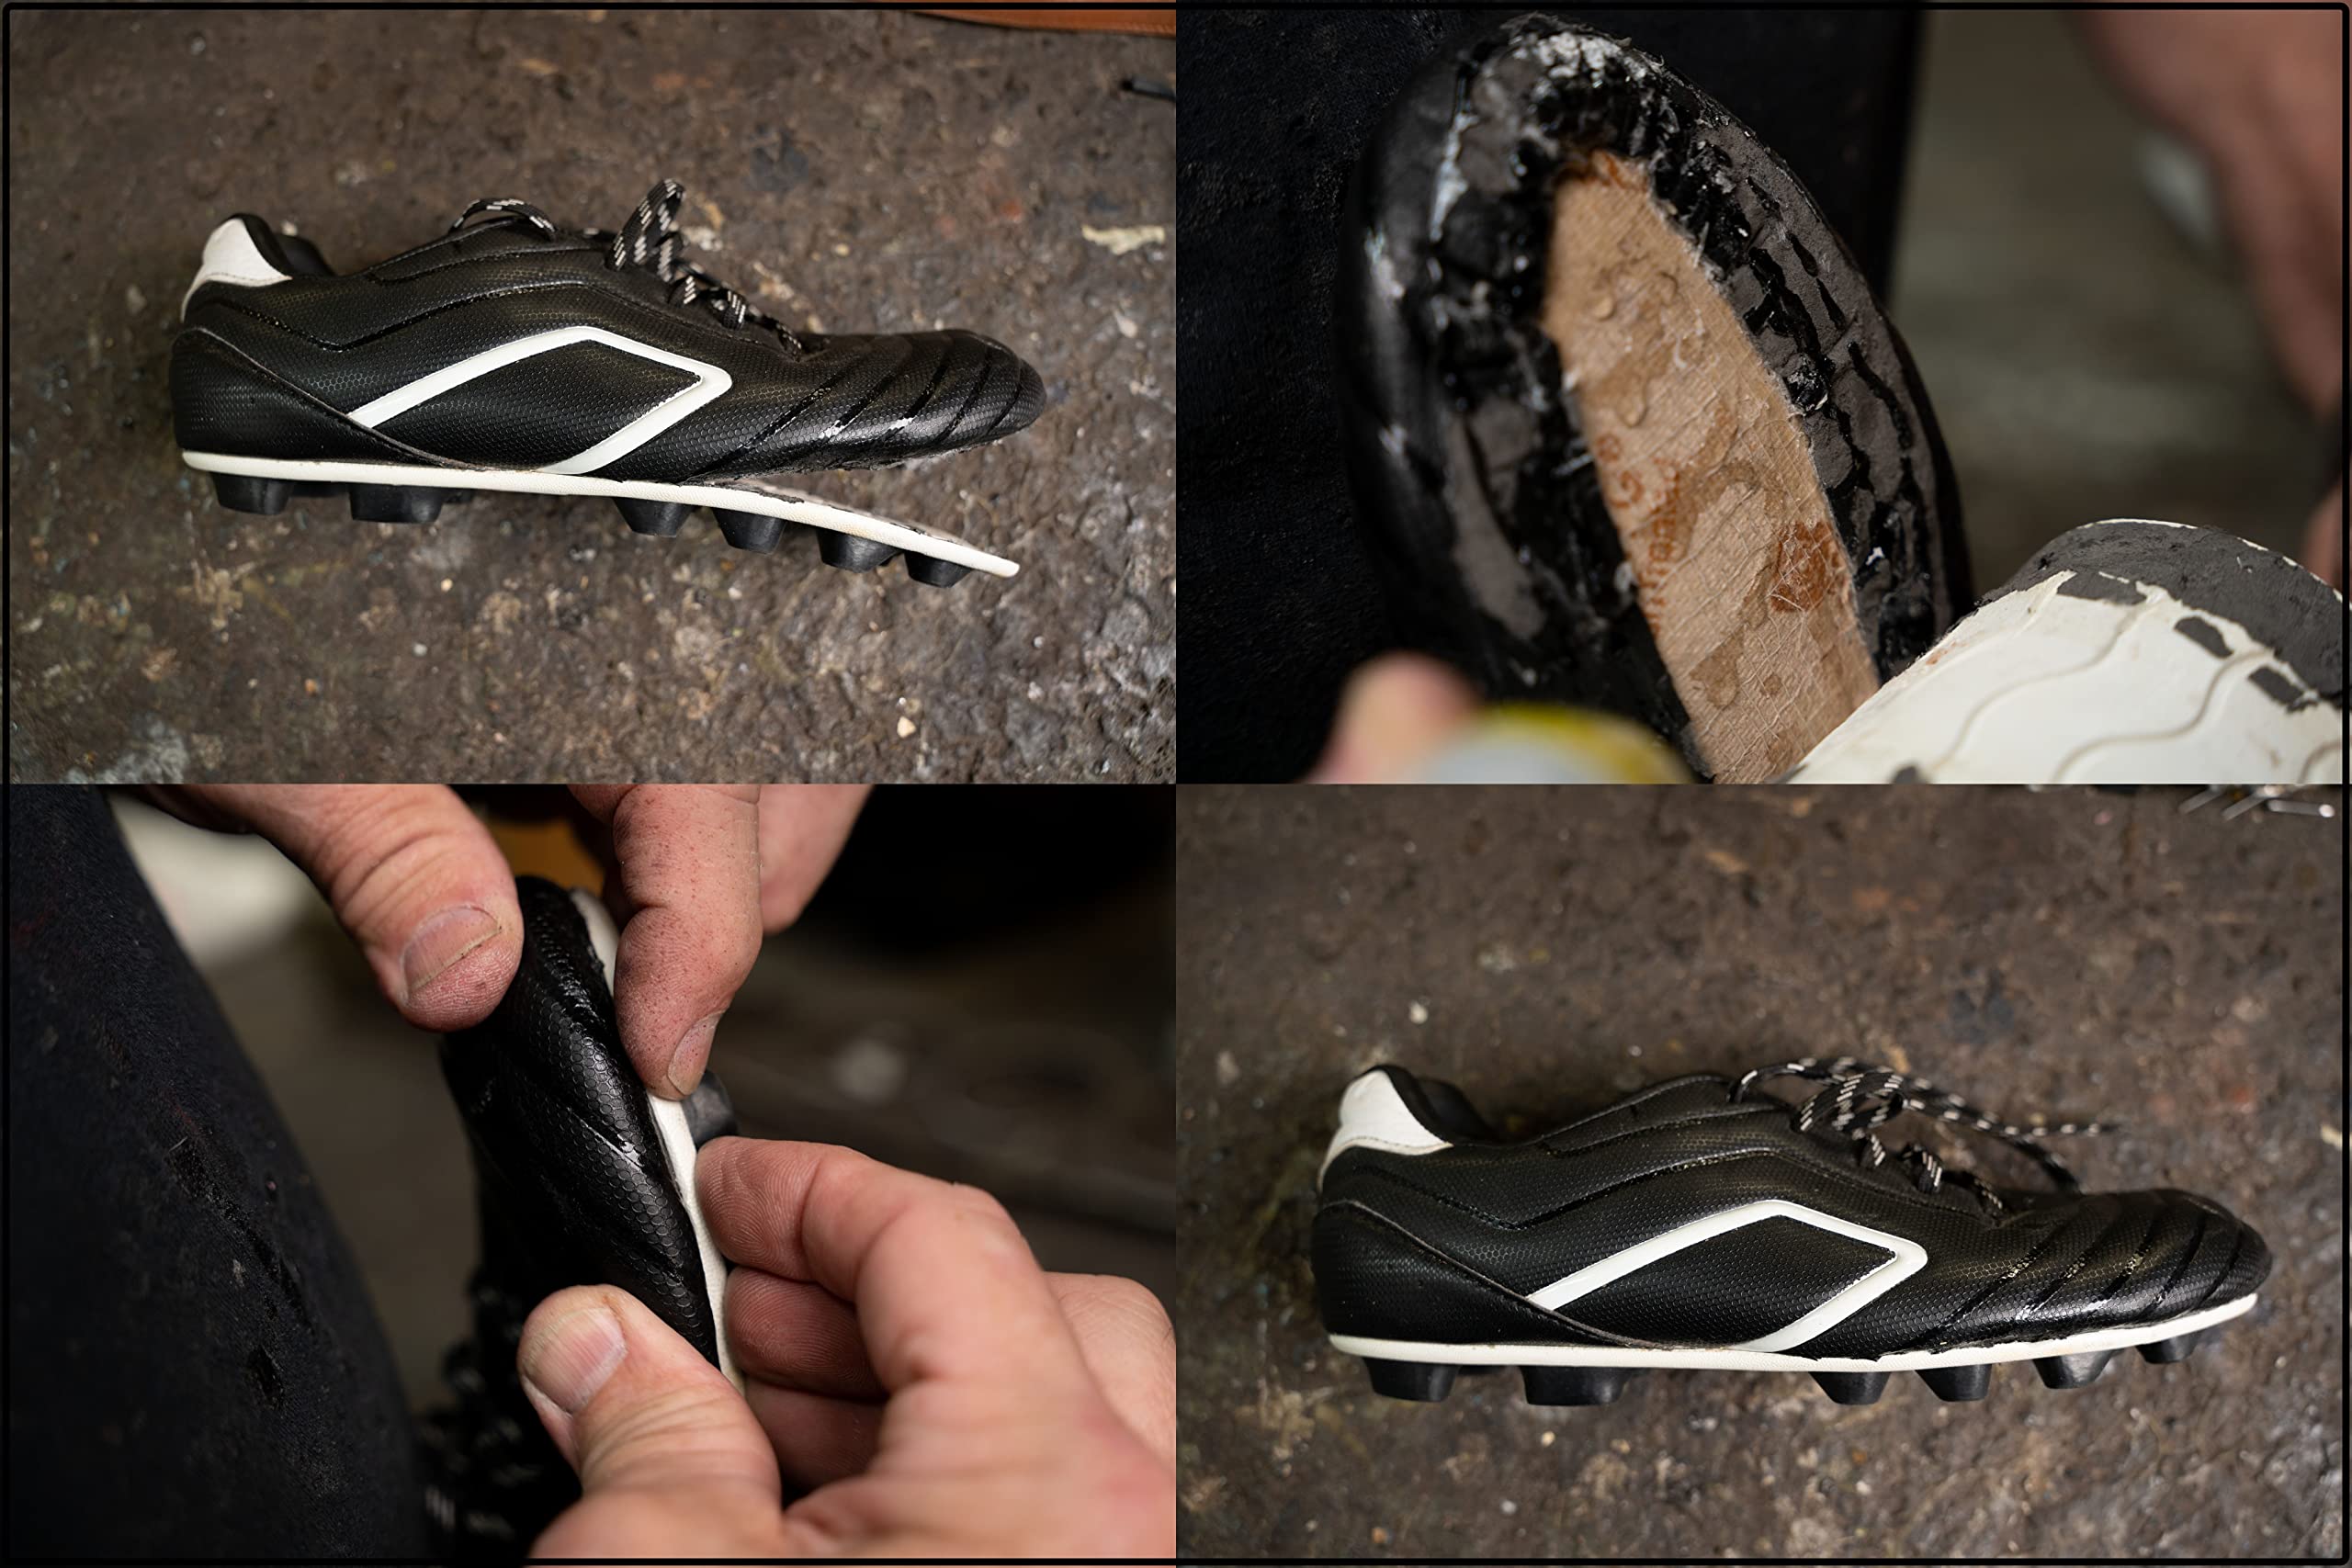 Boot-Fix Shoe Glue: Instant Professional Grade Shoe Repair Glue